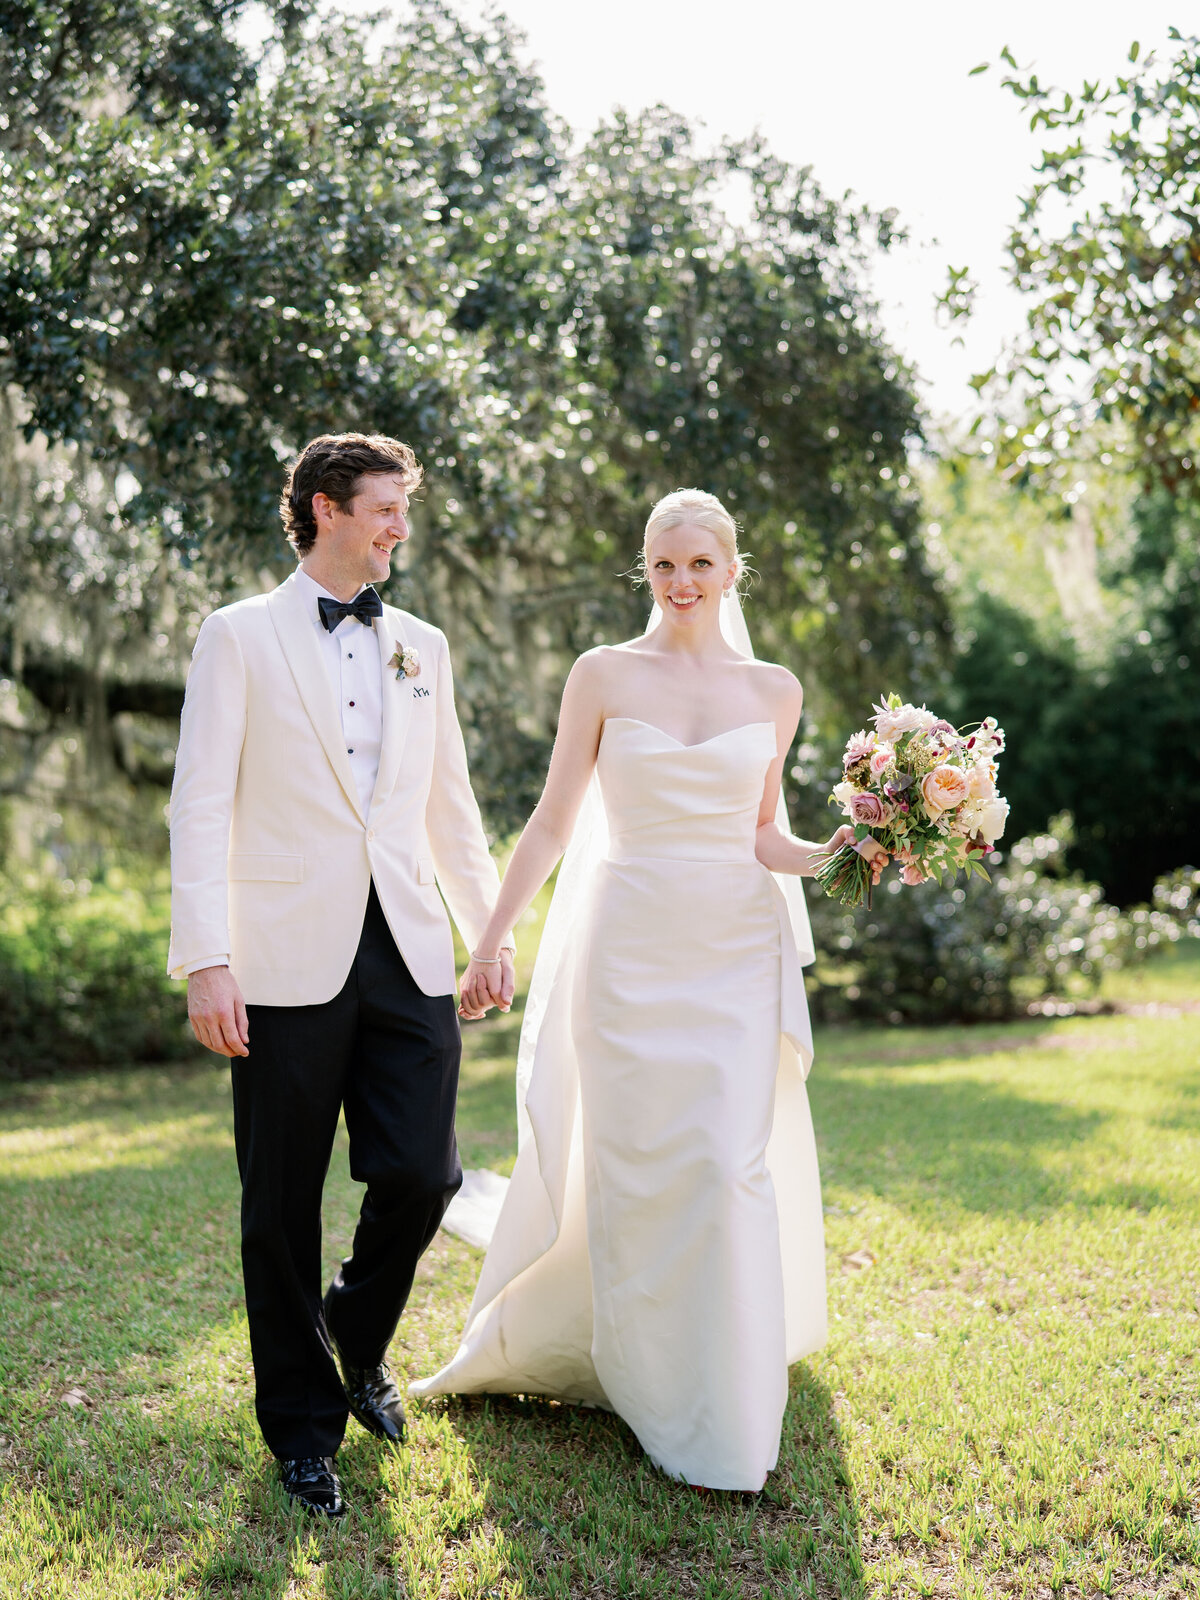 New Orleans Fine Art Wedding Photography - Krystle Akin